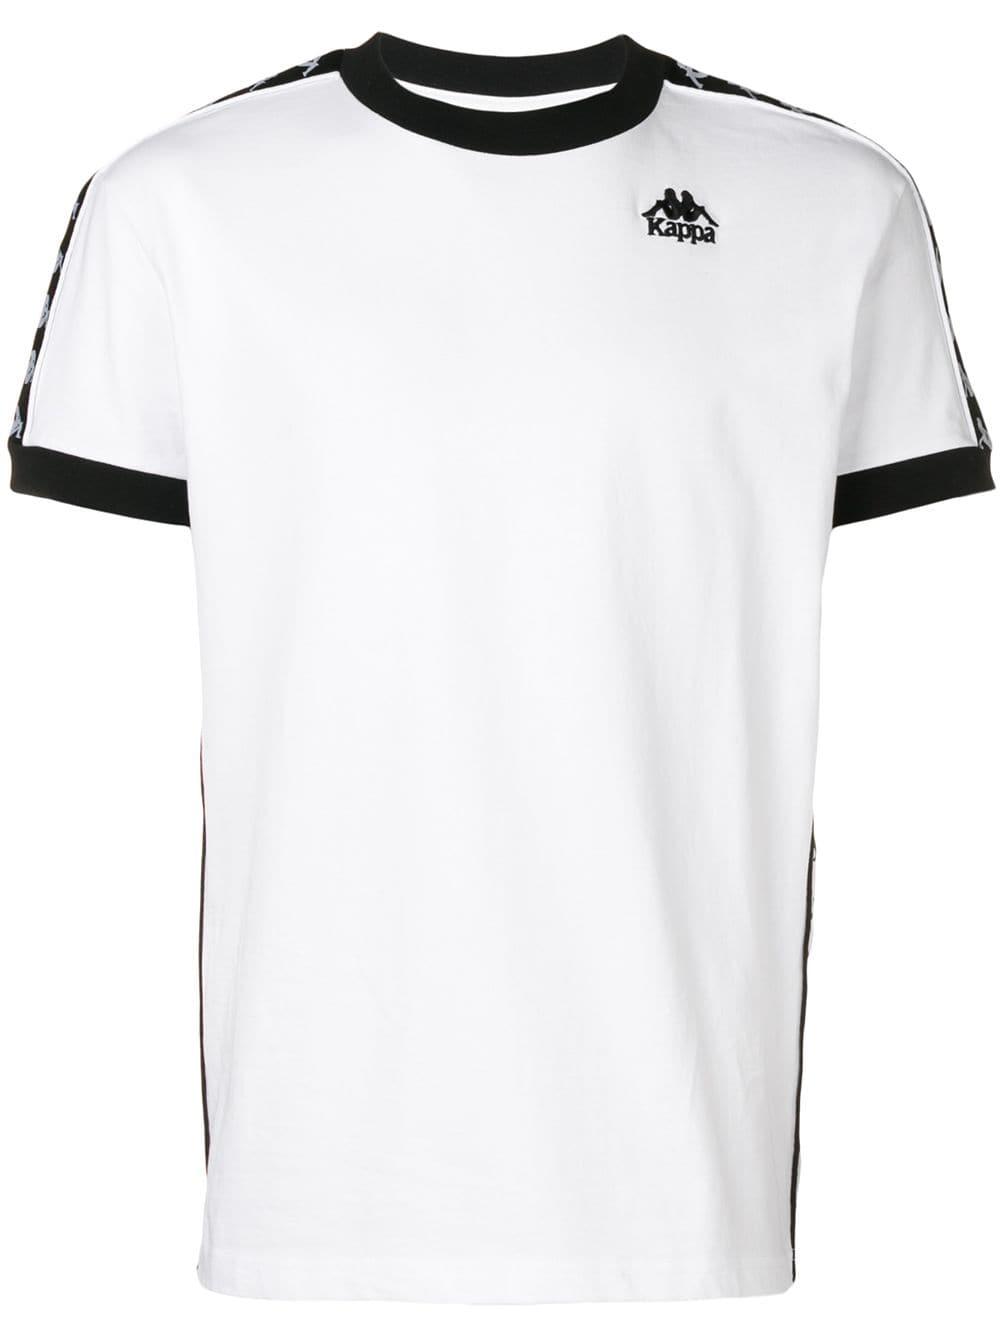 Kappa Cotton Logo Print Stripe T-shirt in White for Men - Lyst